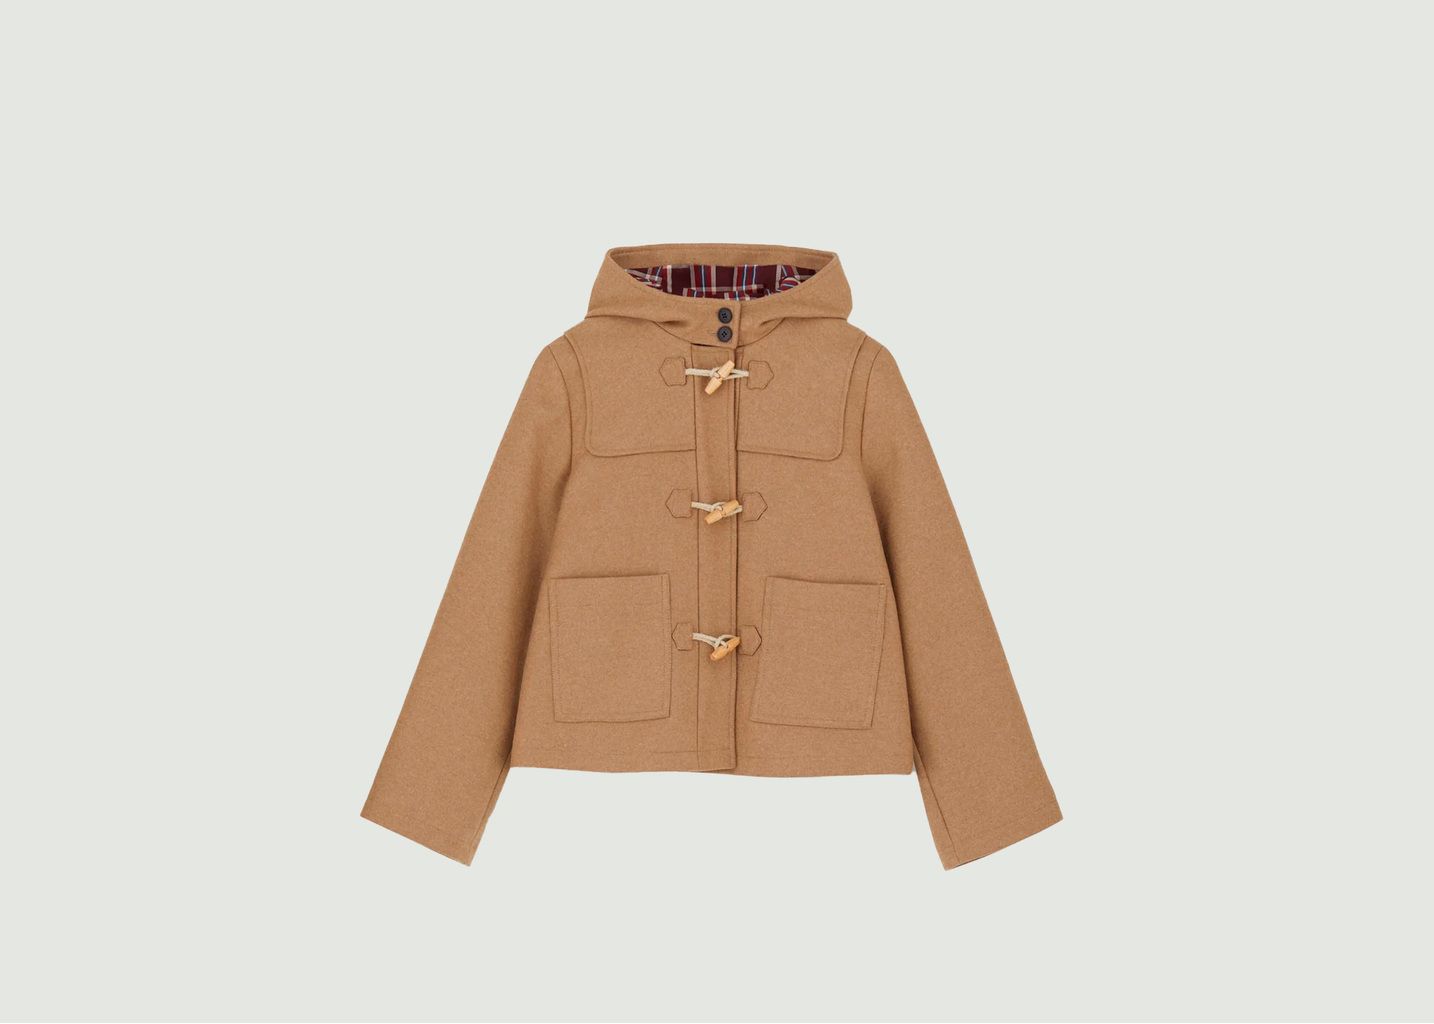 Rowan 4070 jacket - Skall Studio